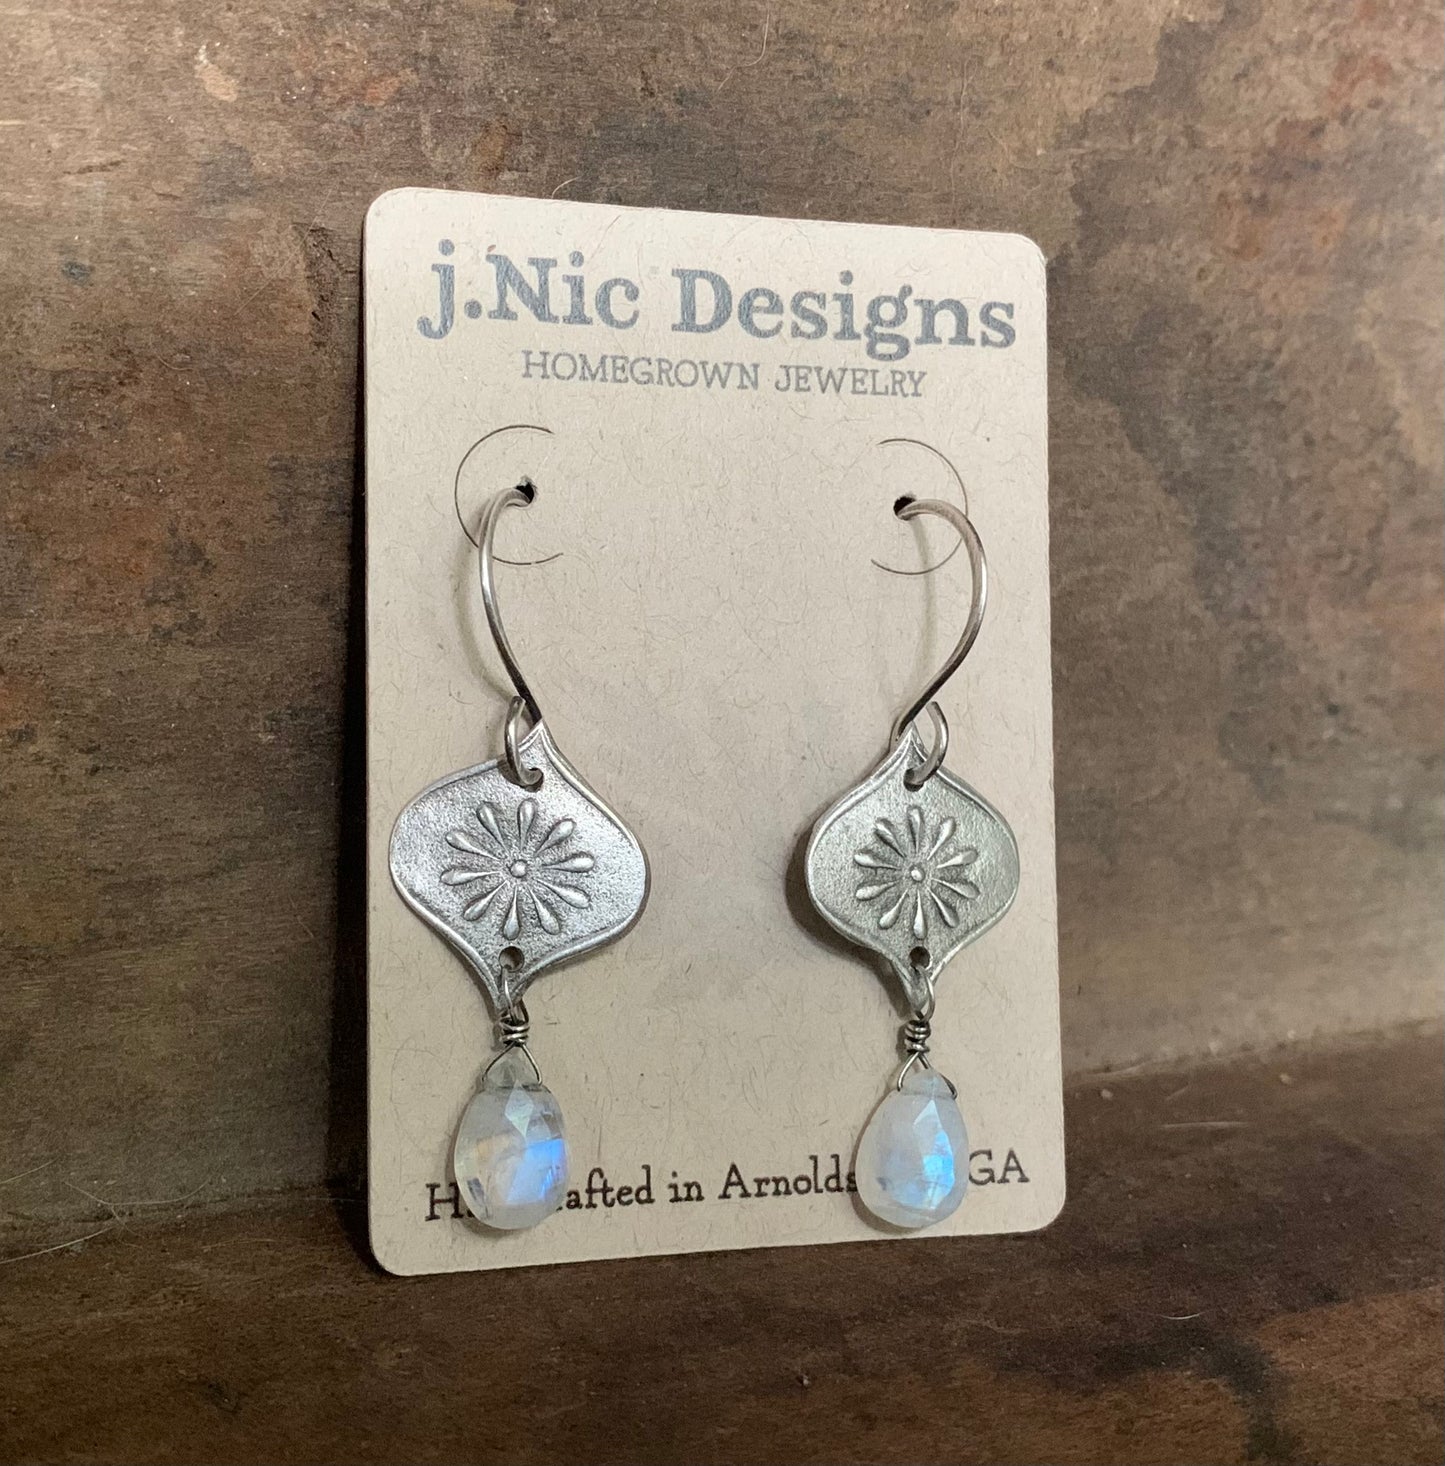 NEW Ponder Earrings - Oxidized fine and sterling silver. Rainbow Moonstone. Handmade dangle earrings